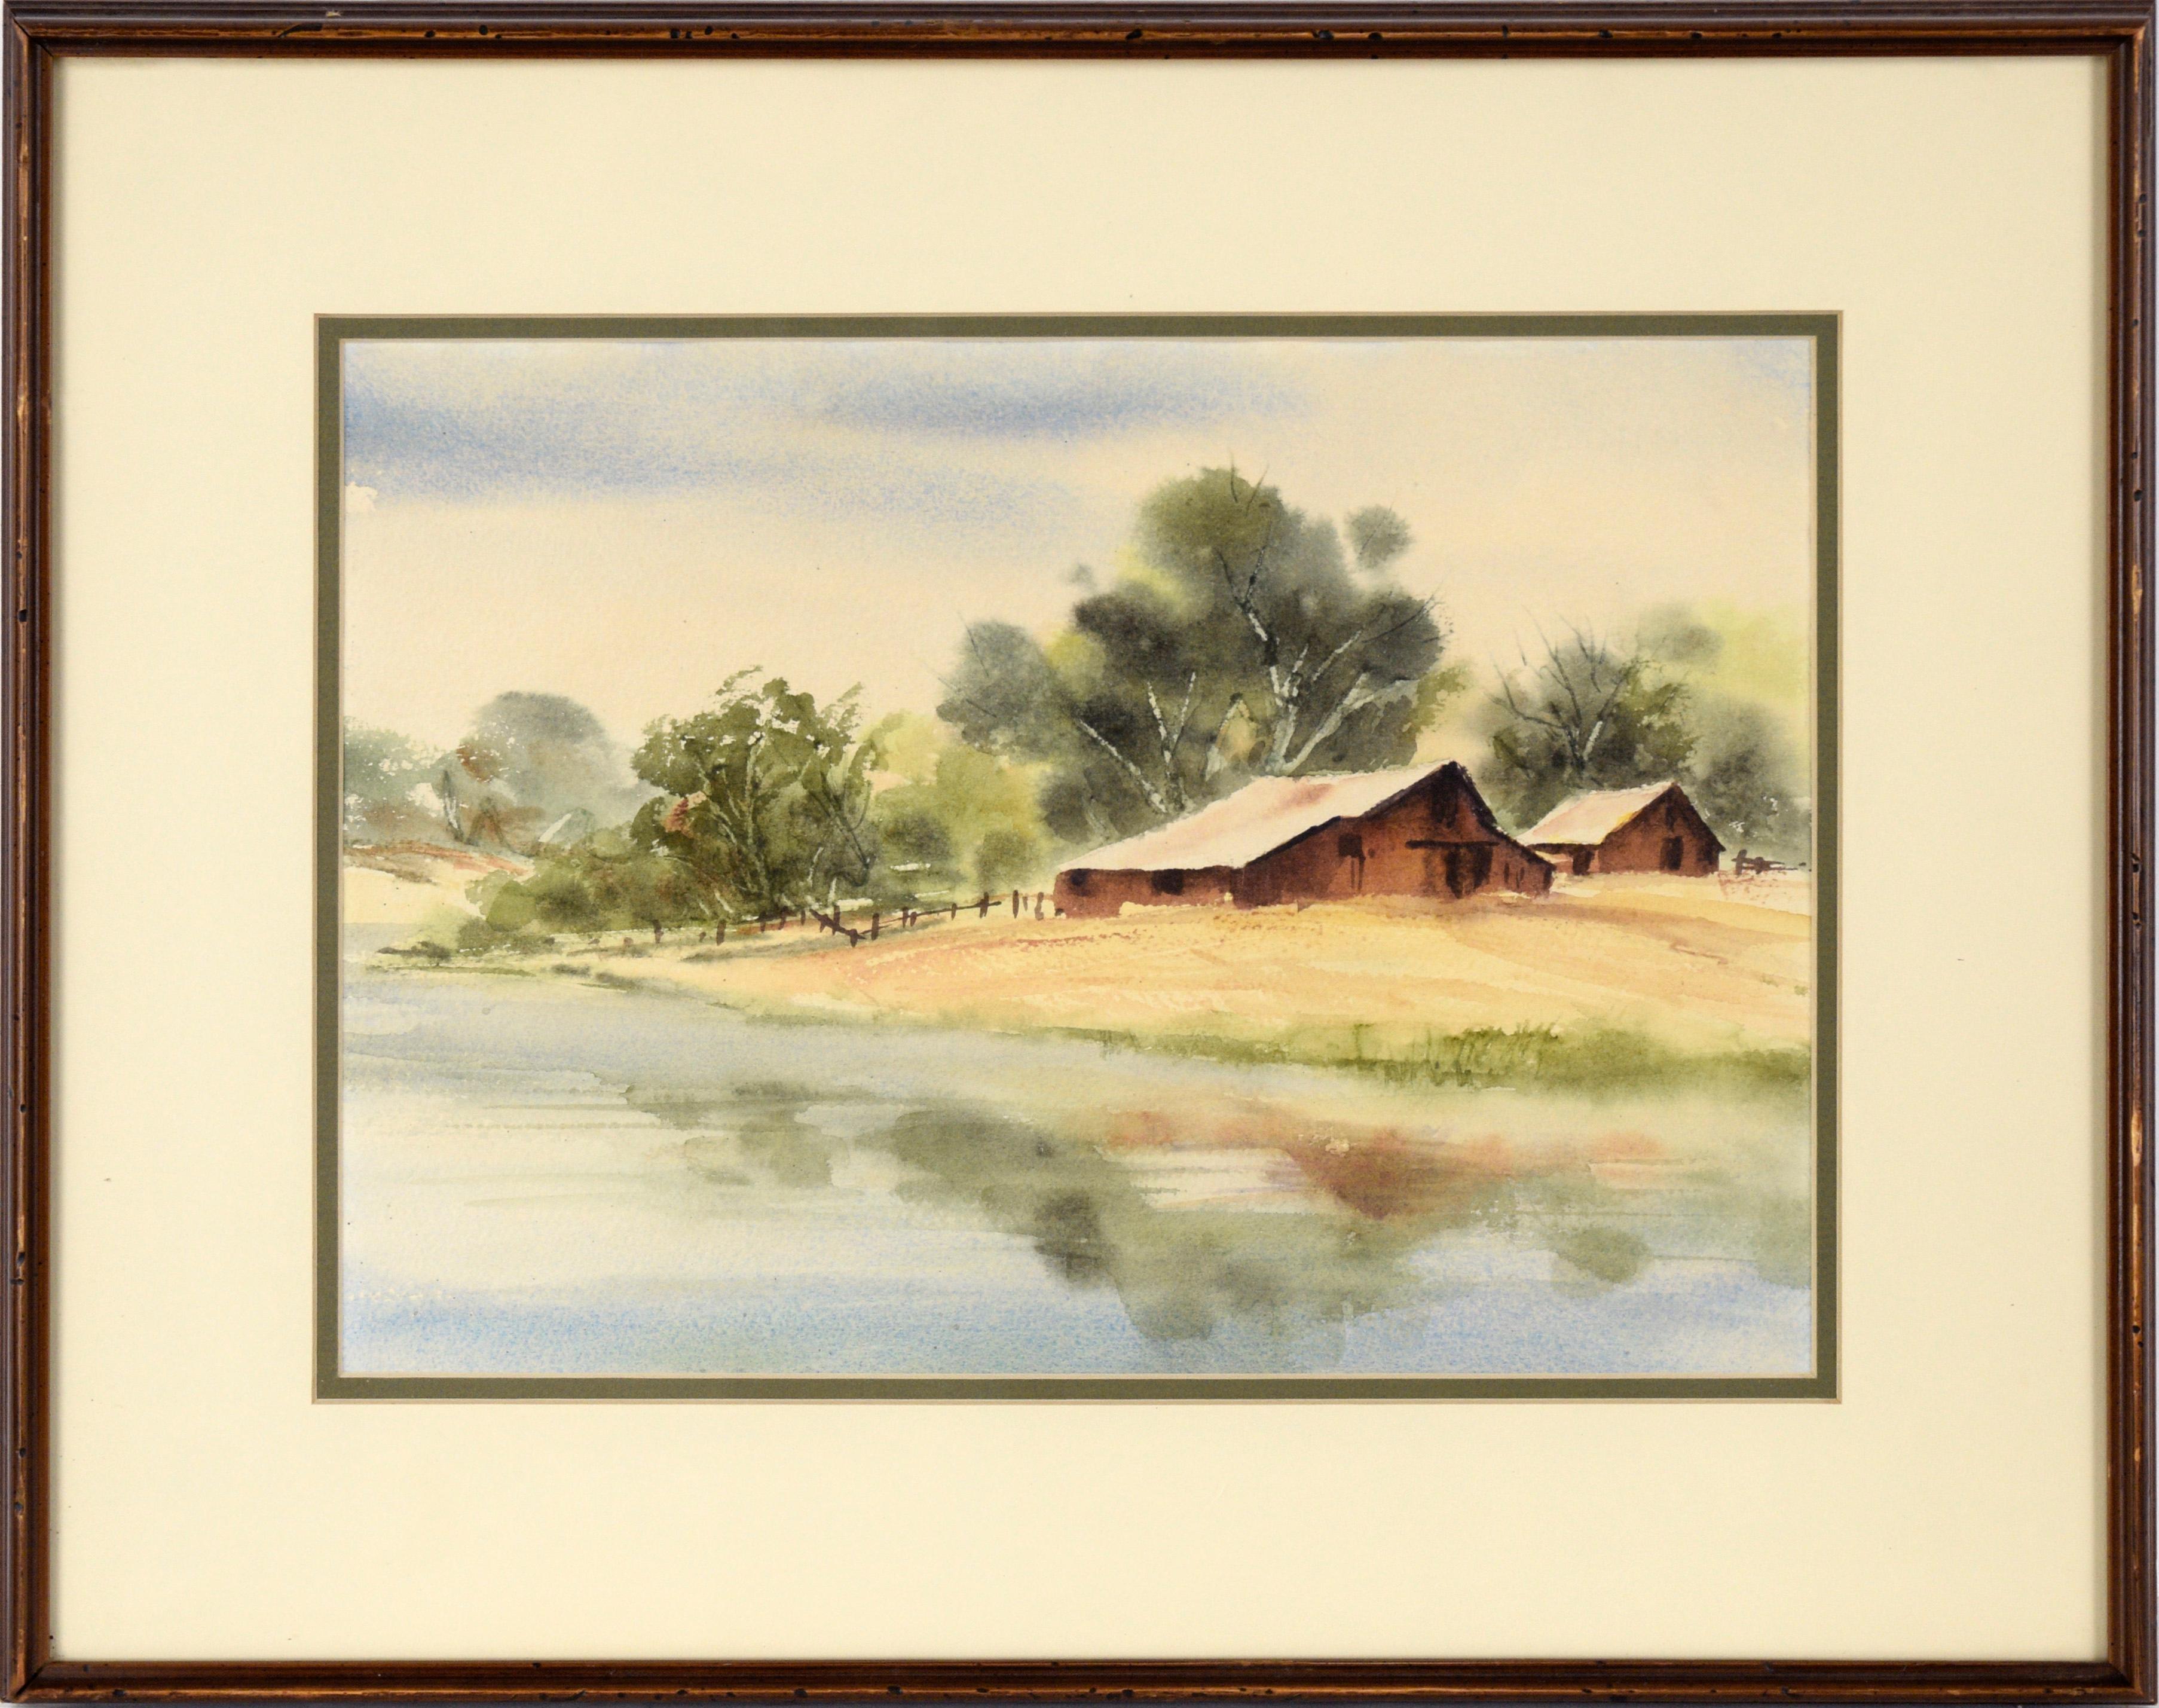 Alice Duke Landscape Art - "Shenandoah Valley" - Rural California Landscape in Watercolor on Paper